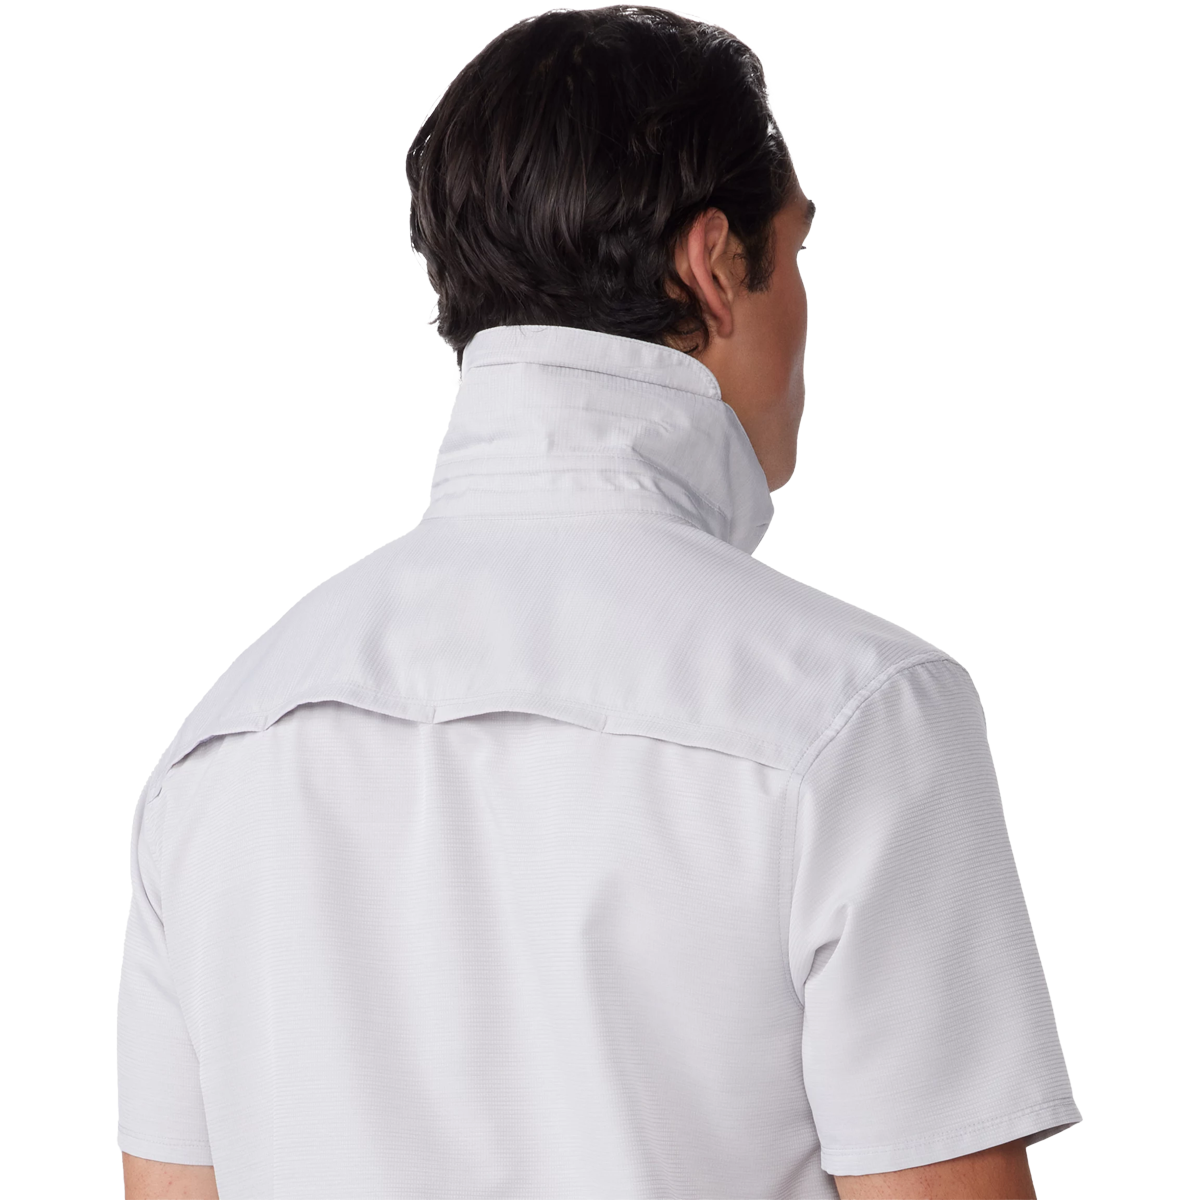 Men's Canyon Shirt Short Sleeve alternate view